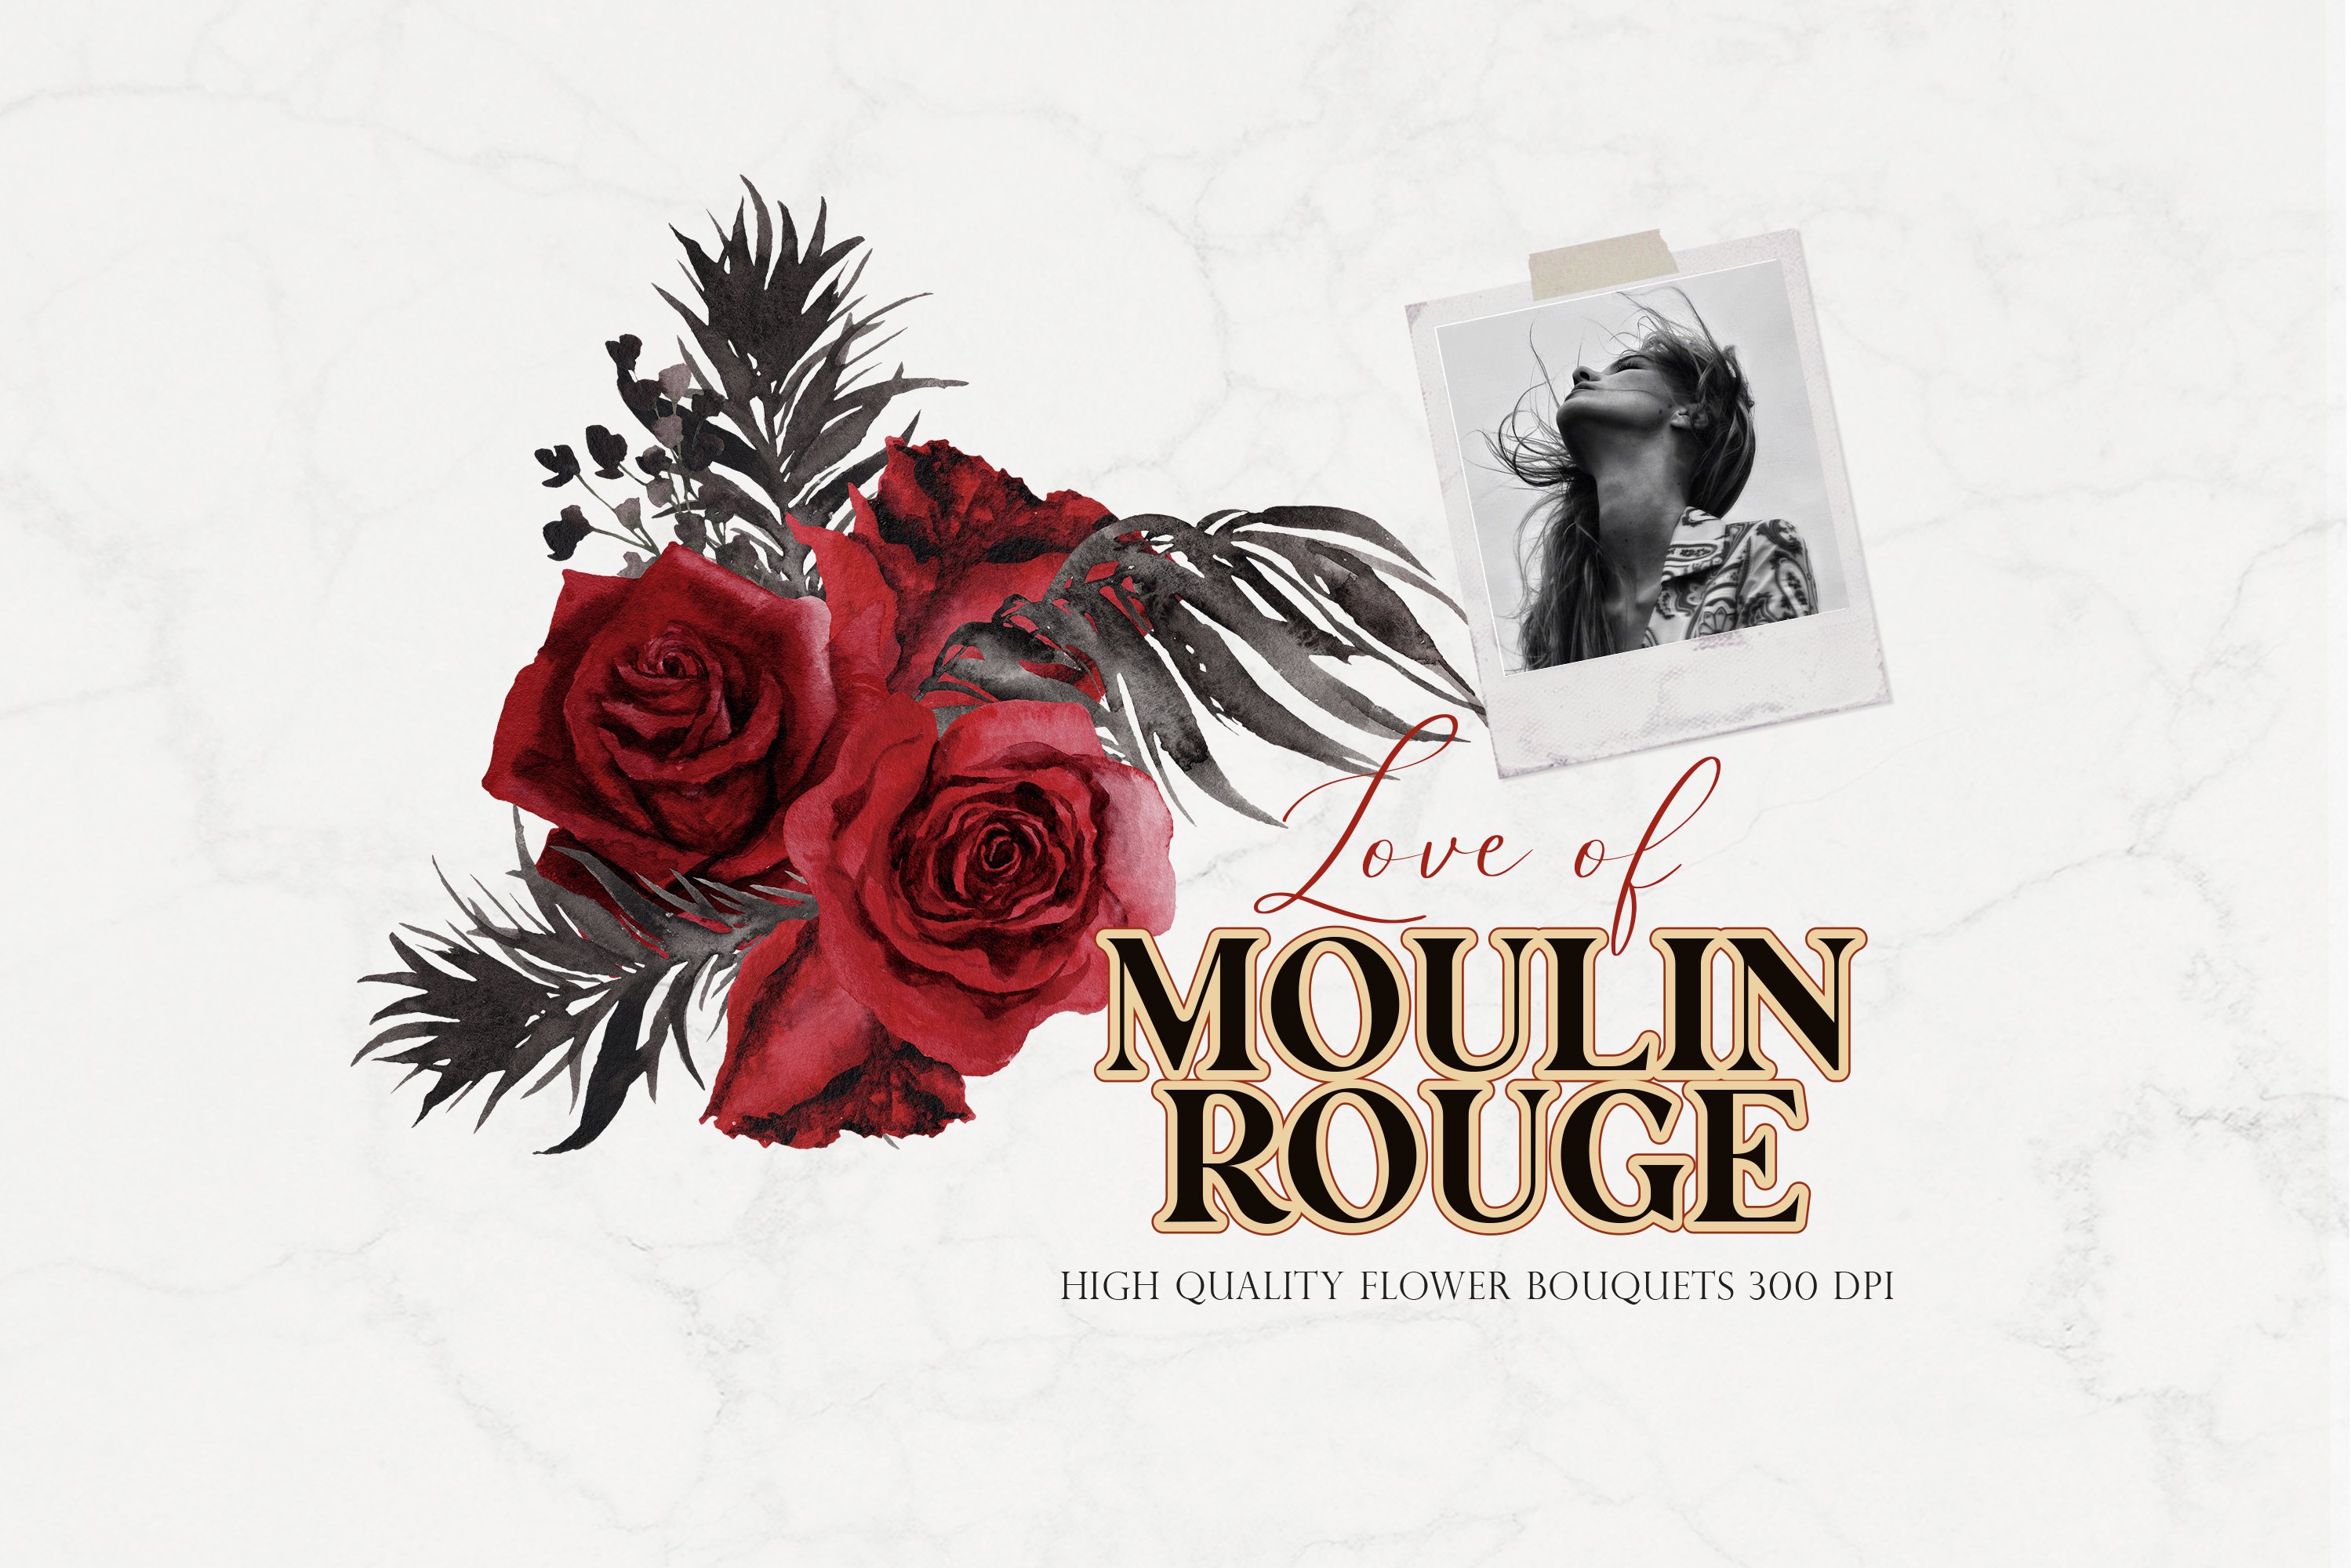 Delicate Moulin Rouge composition.